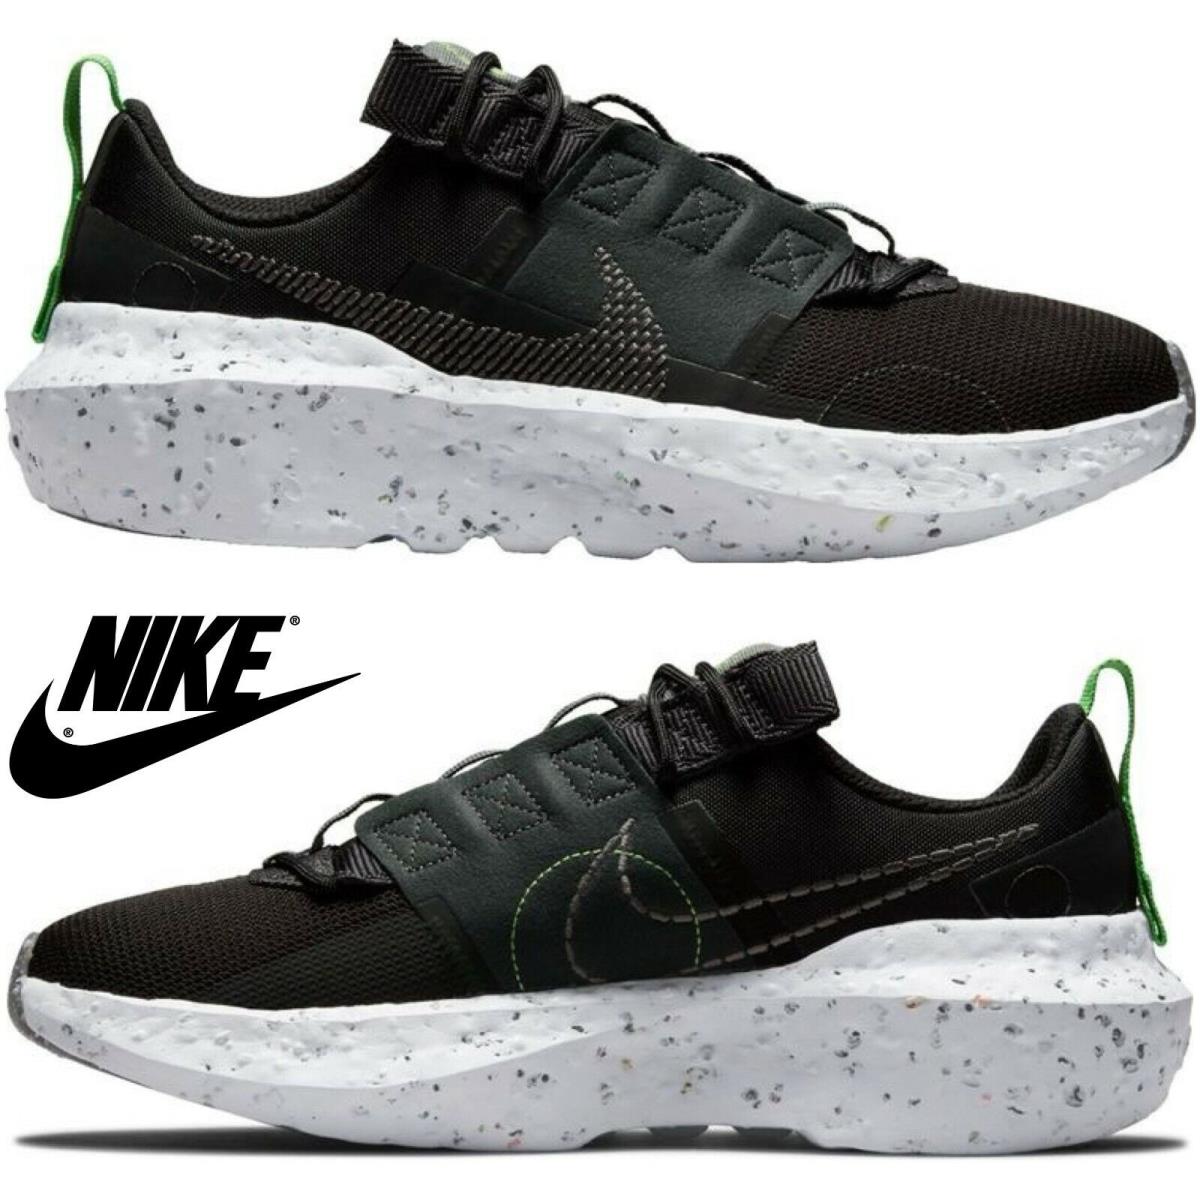 Nike Crater Impact Women s Sneakers Casual Shoes Premium Running Sport Black